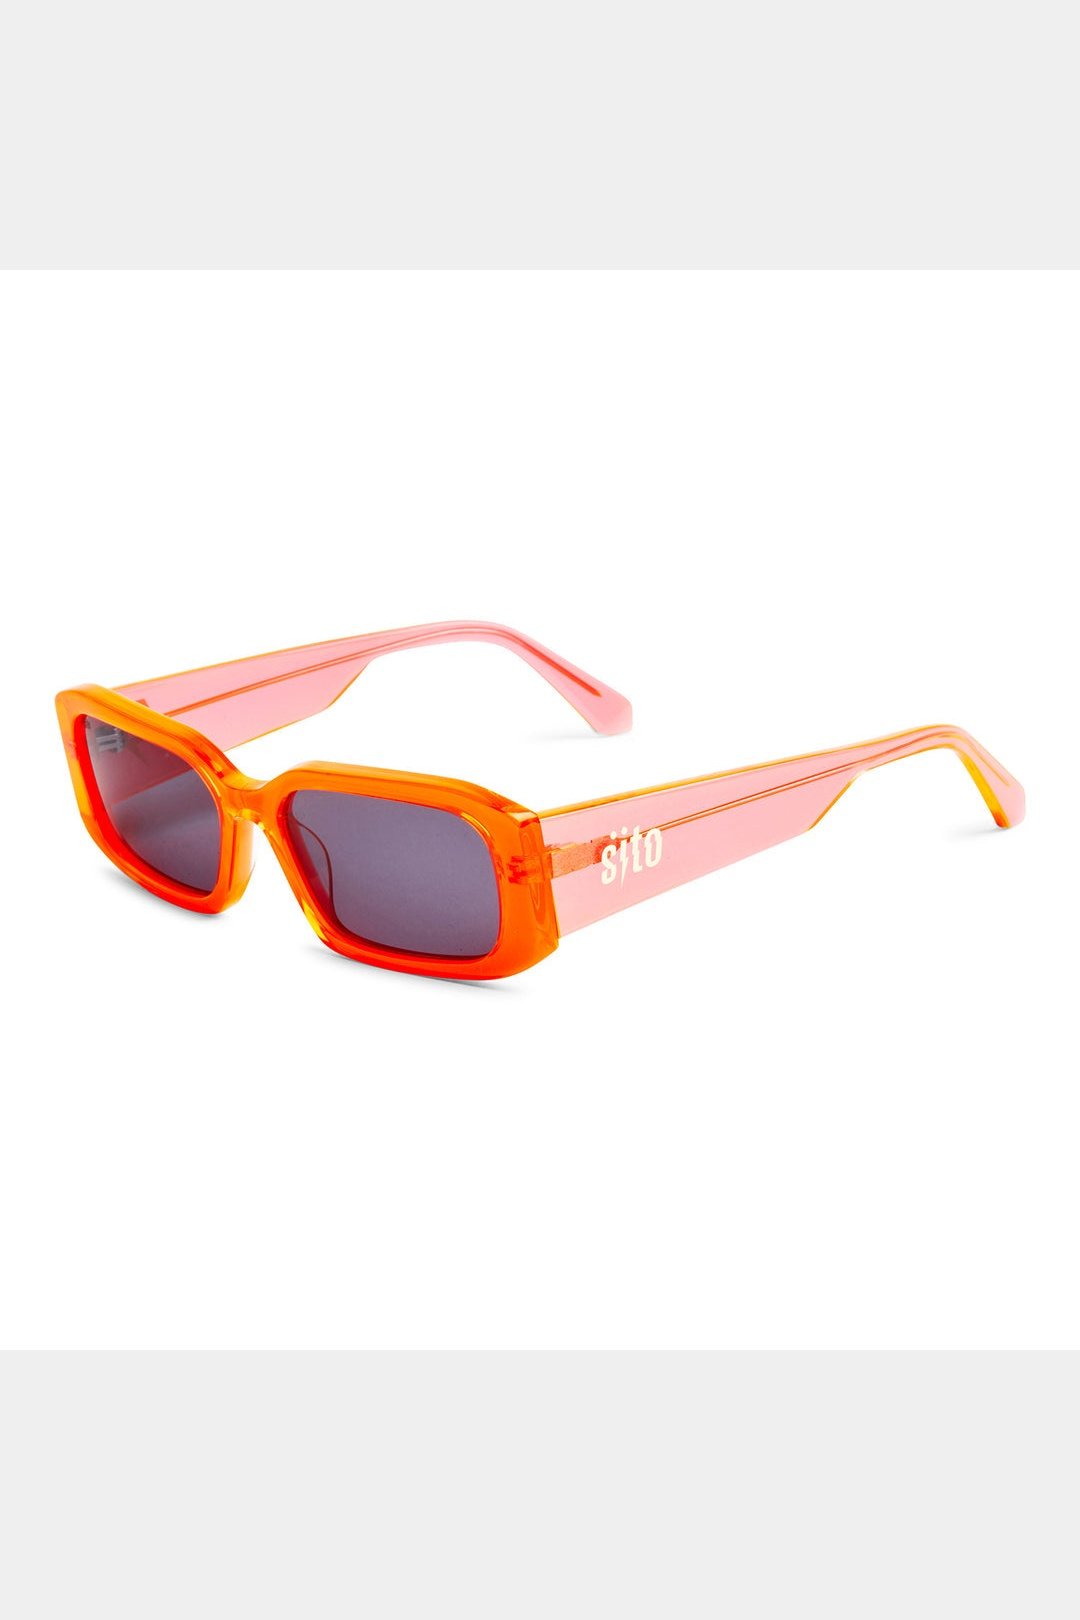 Sito electric vision - neon orange/smokey grey